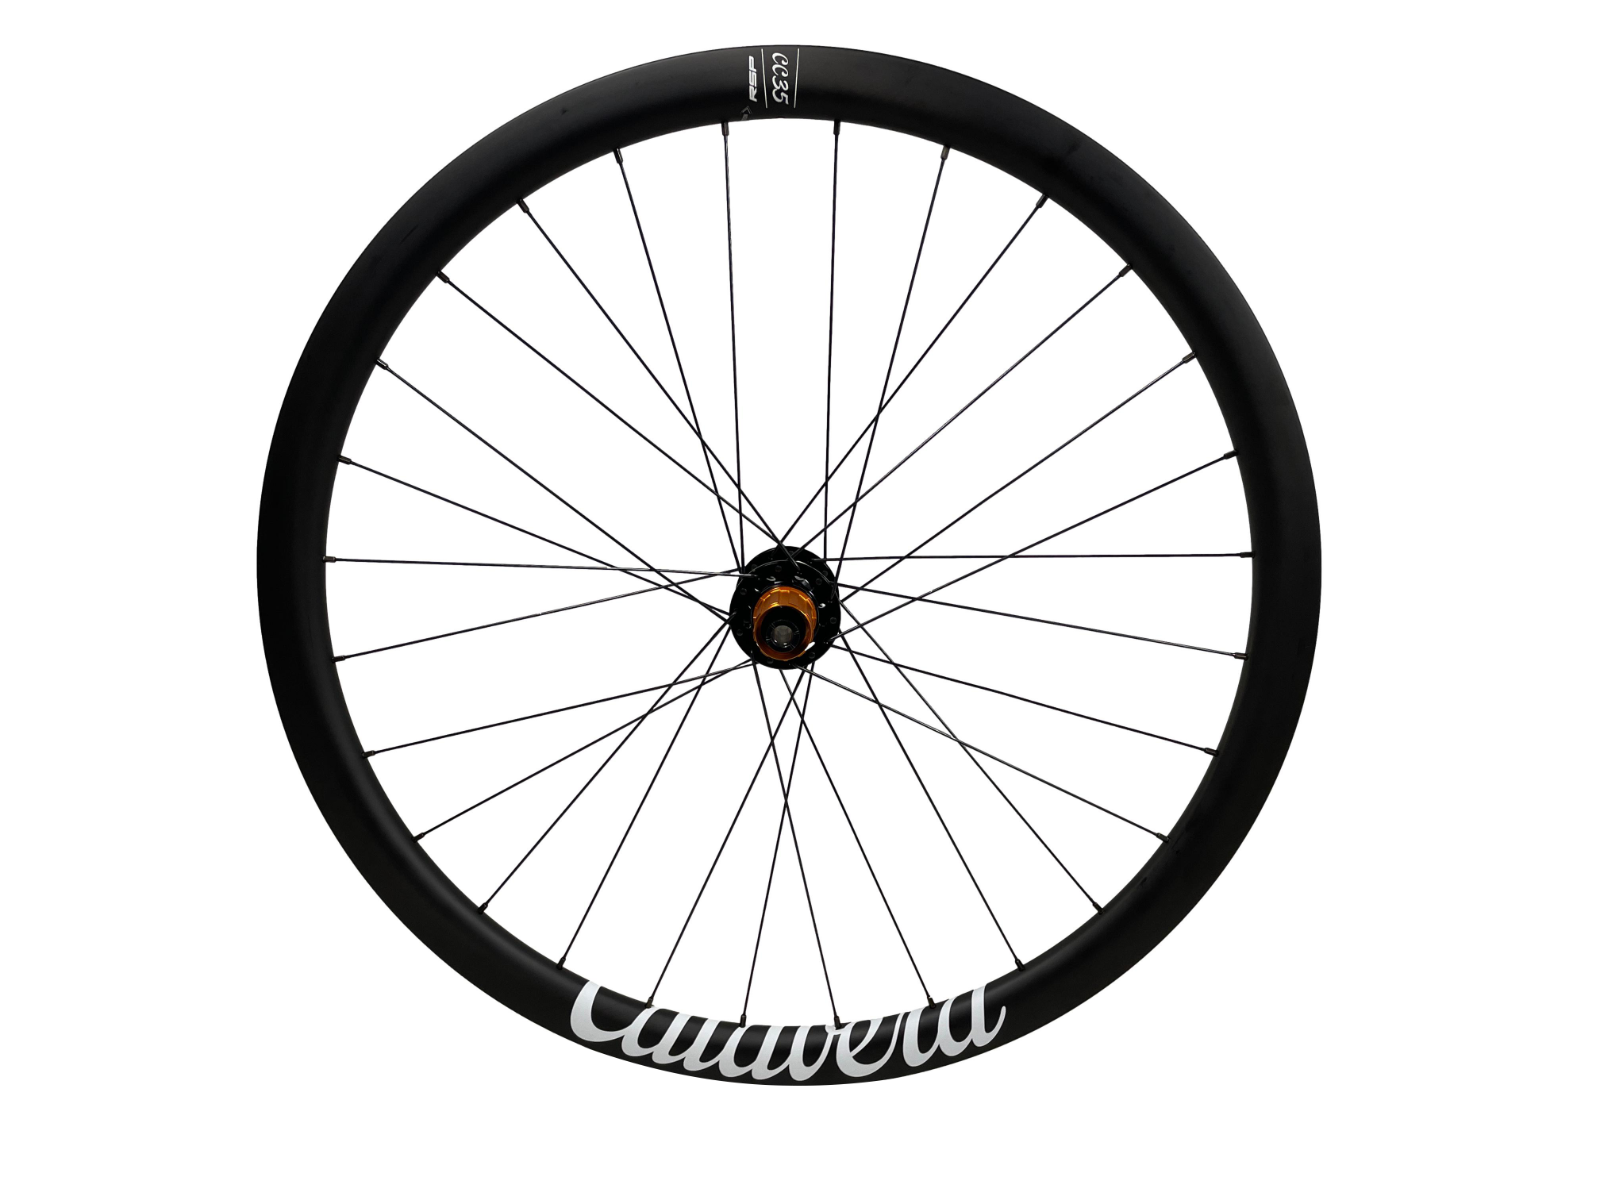 RSP Calavera CC35 Carbon Road Bike DB Rear Wheel - 700c - Thru Axle - RRP: £449 - Sportandleisure.com (7115329077402)